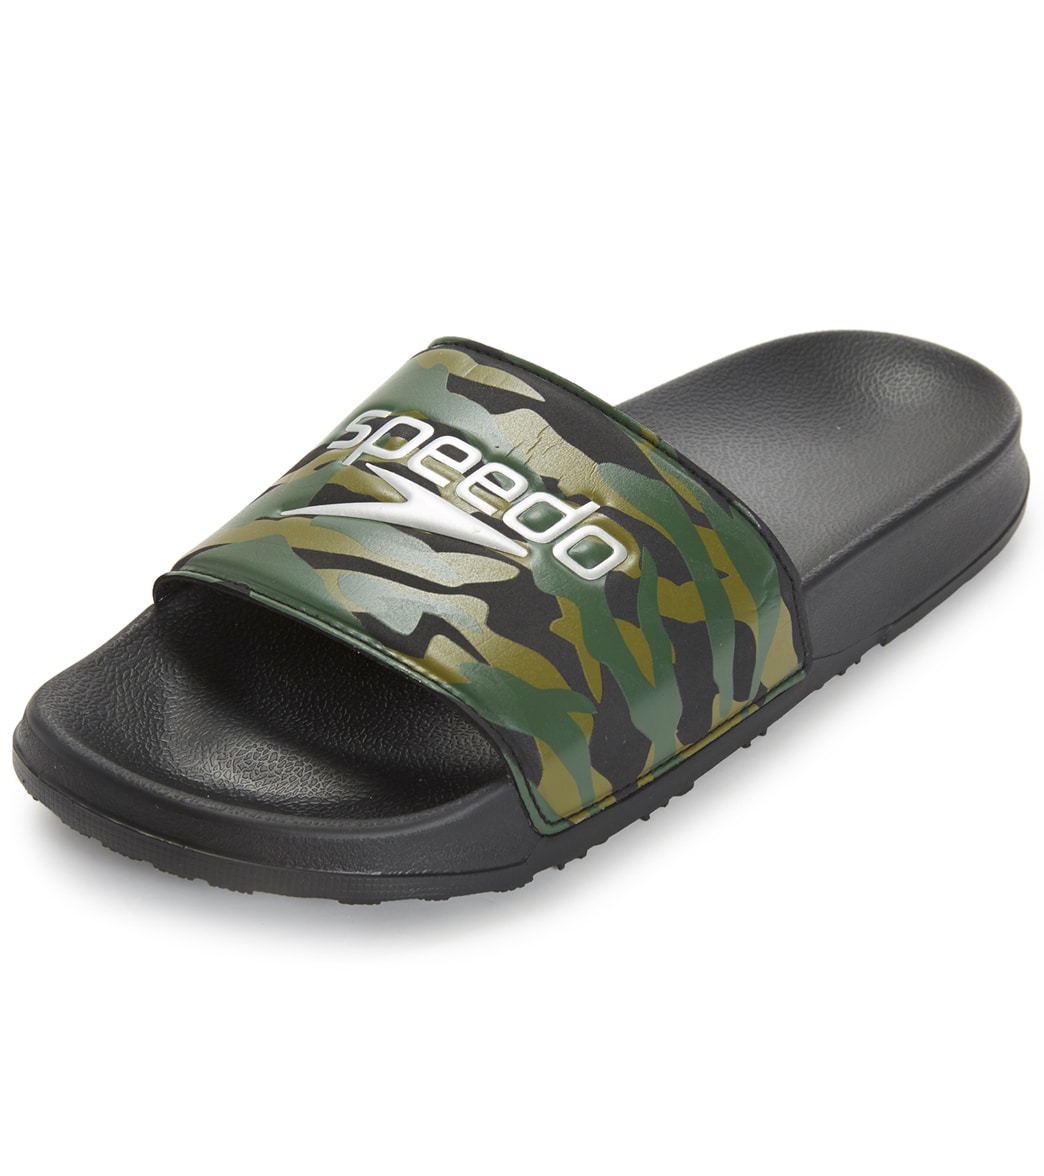 Speedo Unisex Deck Slides - Black/Camo Green 12 - Swimoutlet.com